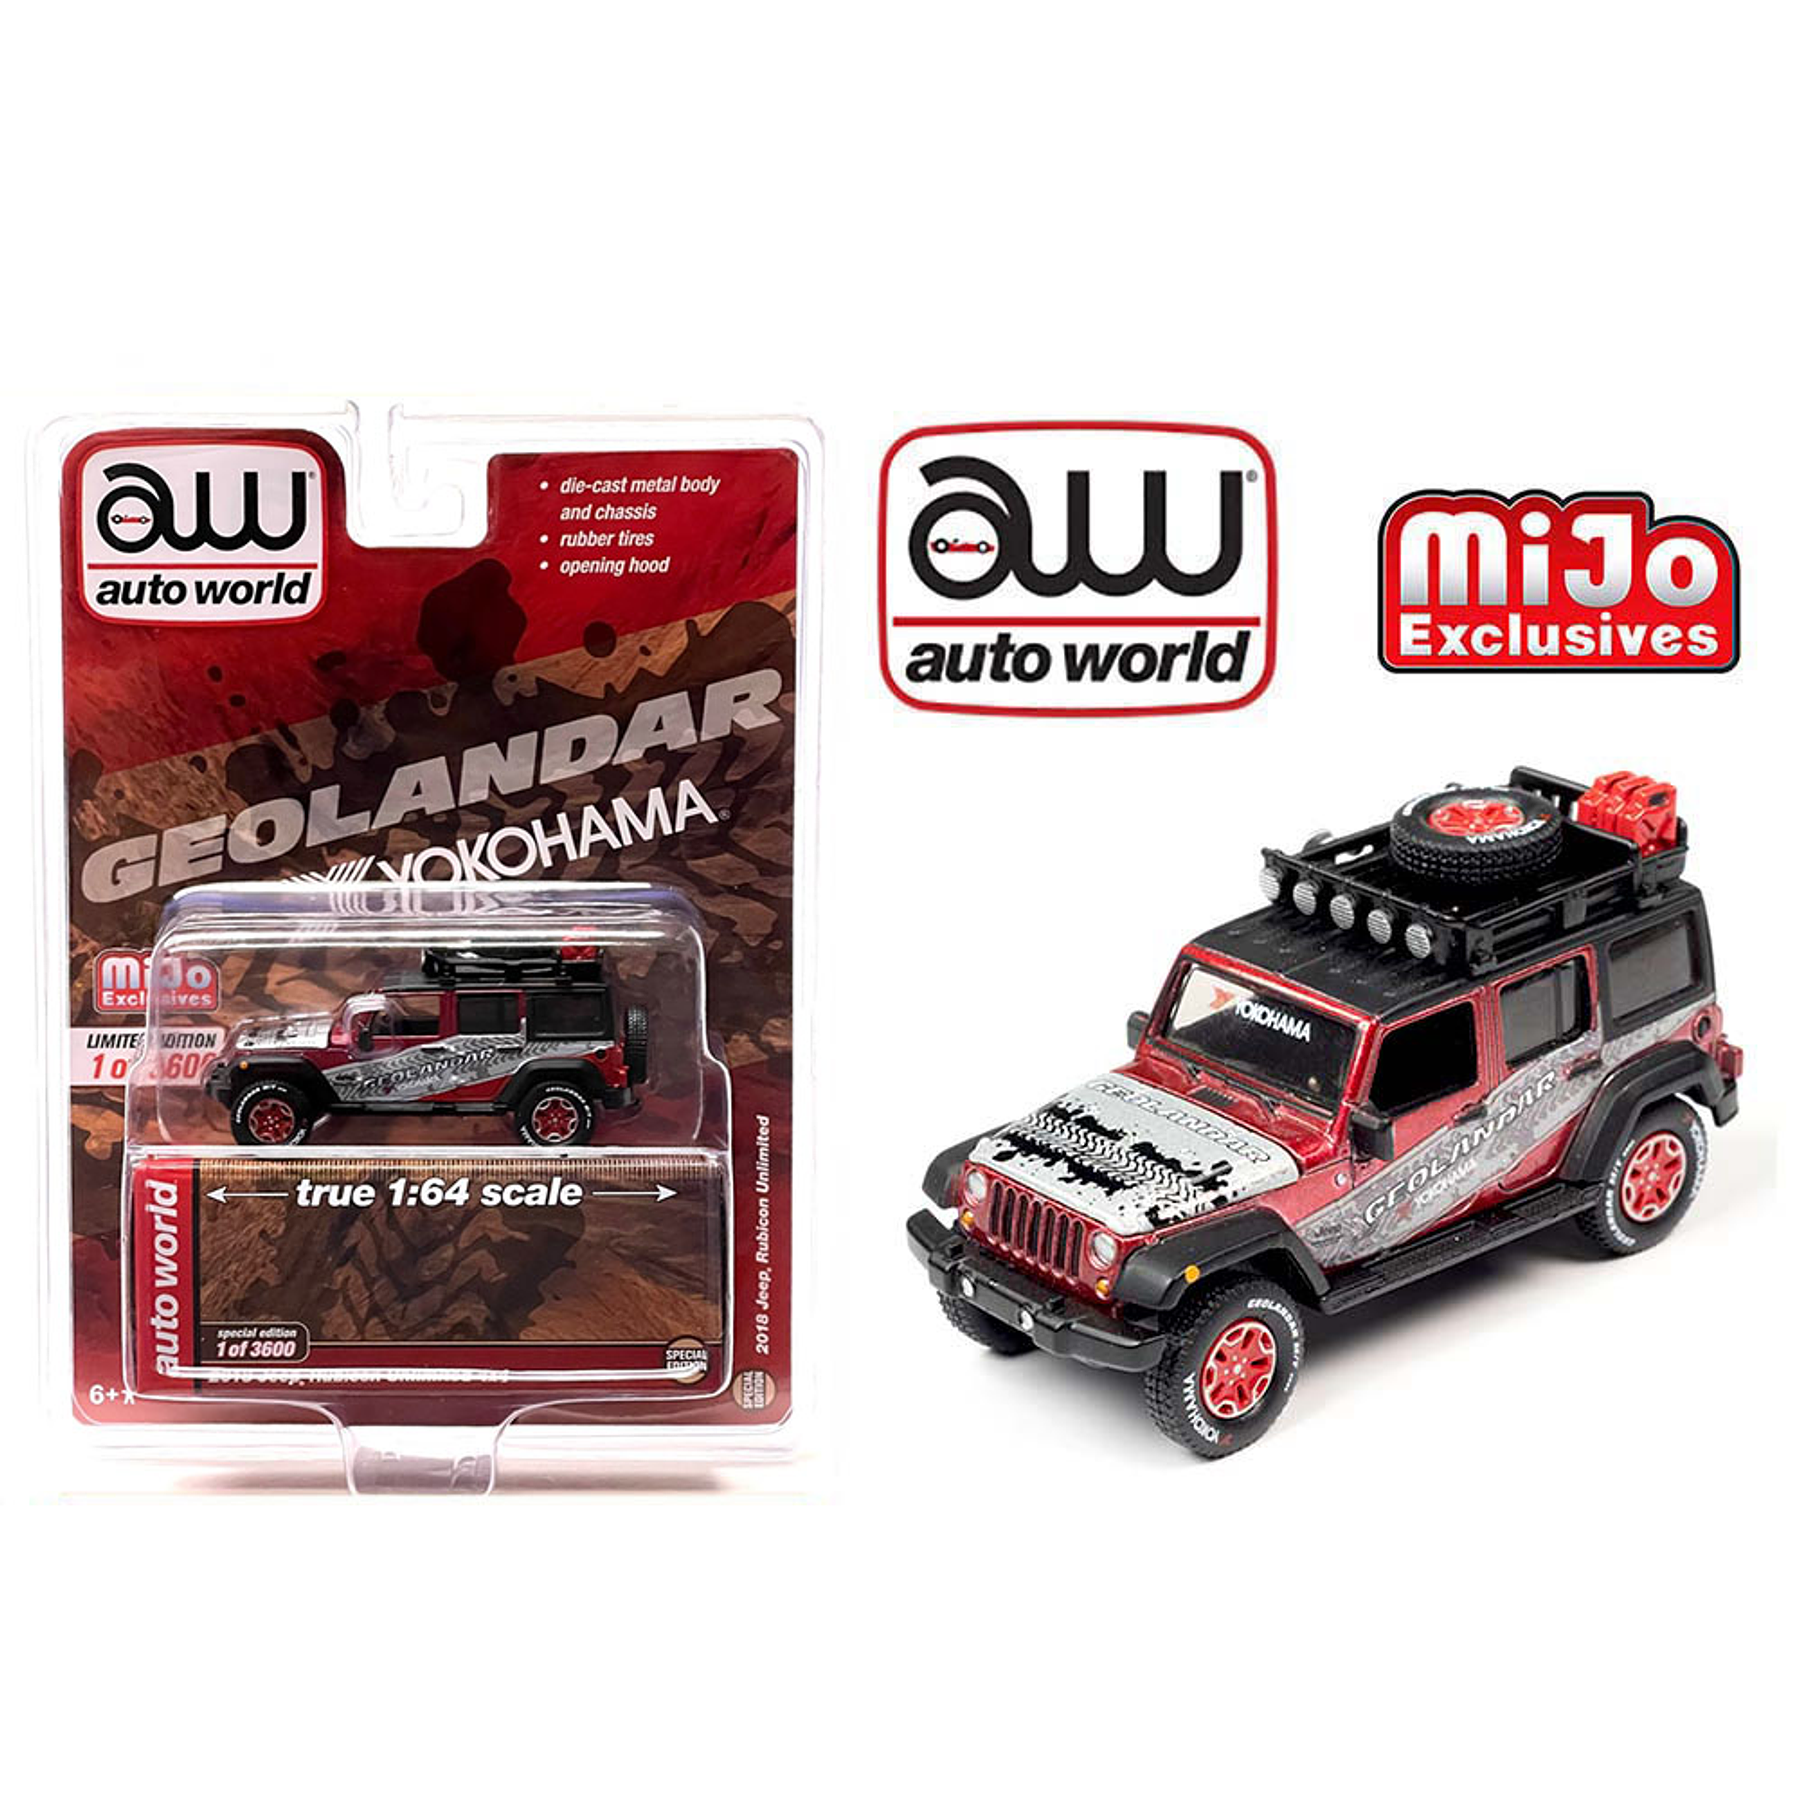 Auto World 1:64 Mijo Exclusives 2018 Jeep Rubicon Unlimited 4x4 Yokohama Geolandar Livery Limited 3,600 Pcs